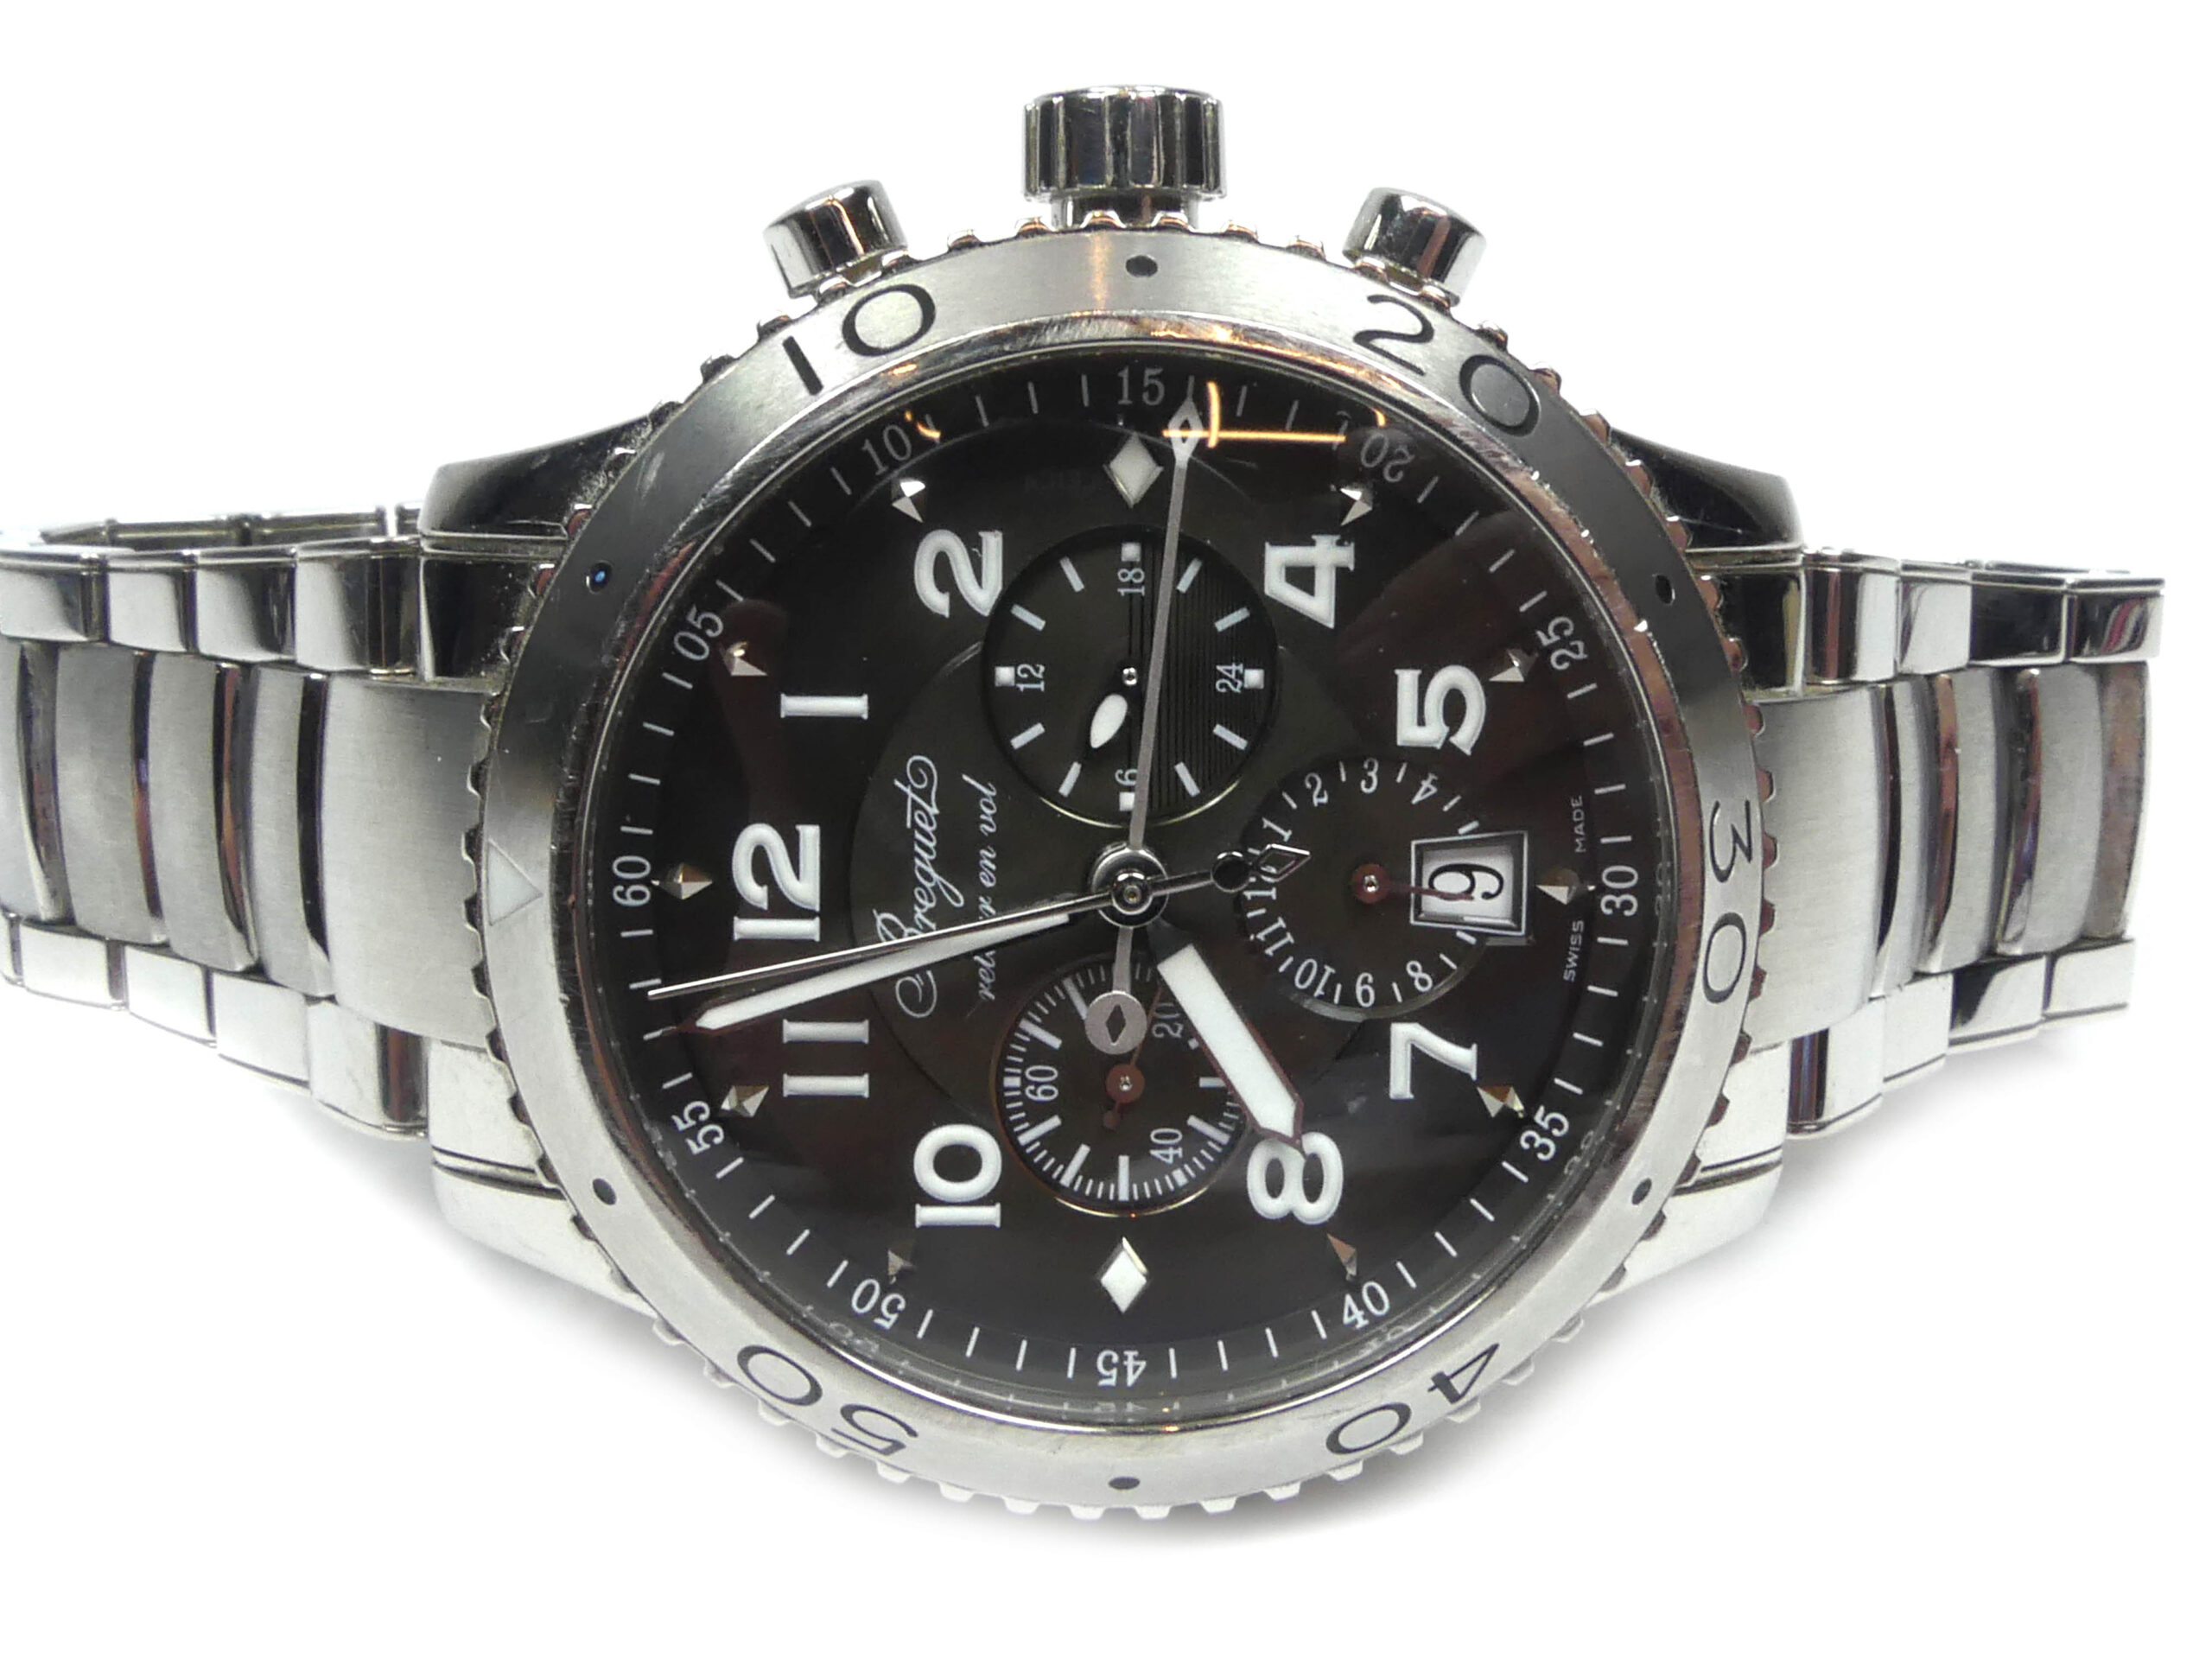 Gents Transatlantique Type XXI Flyback Chronograph Breguet Watch